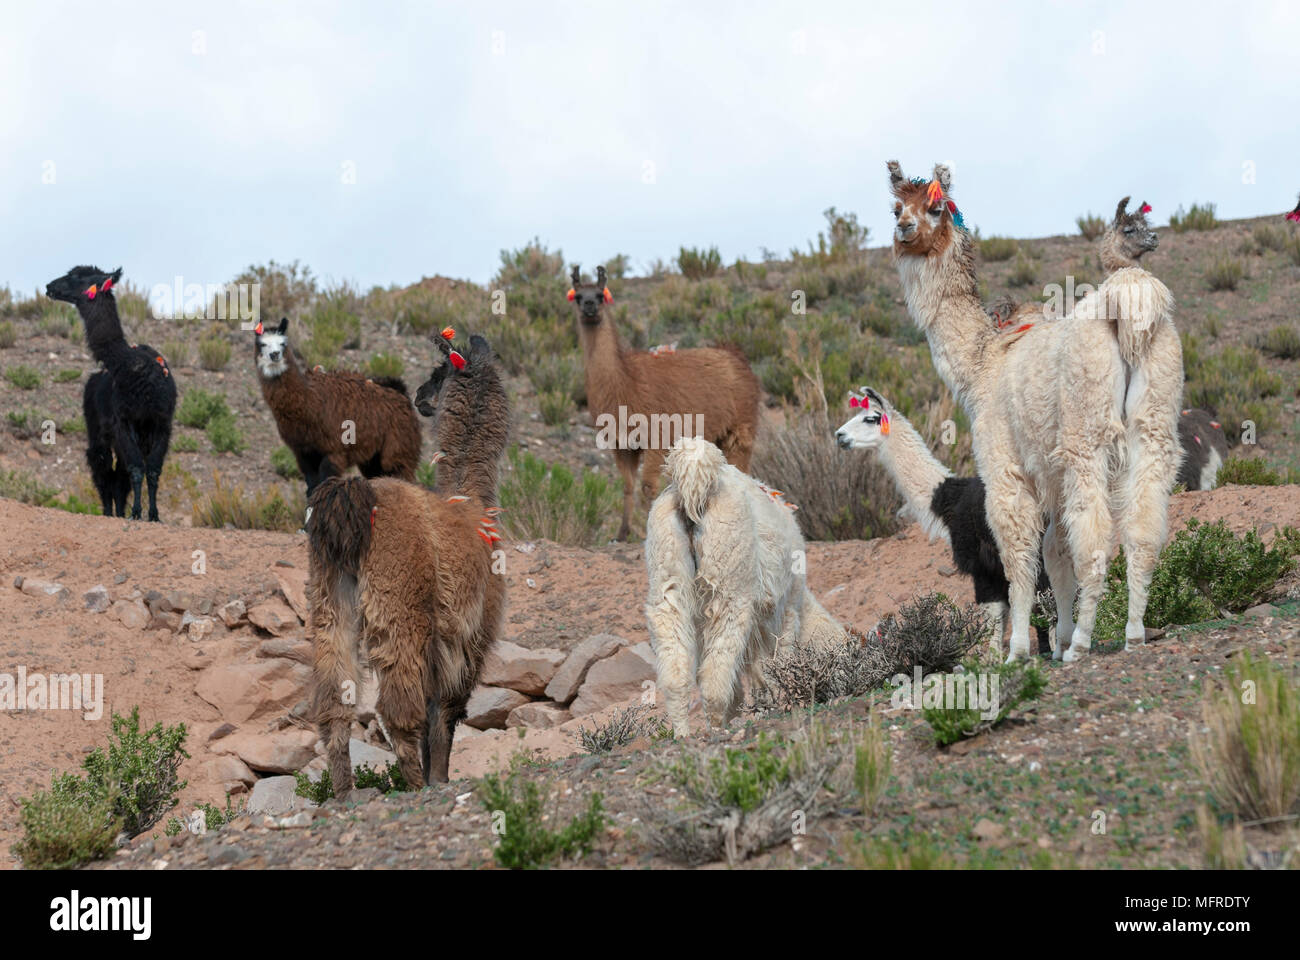 Lama (Lama Glama) Höhenlage Kameliden aus Südamerika Stockfoto